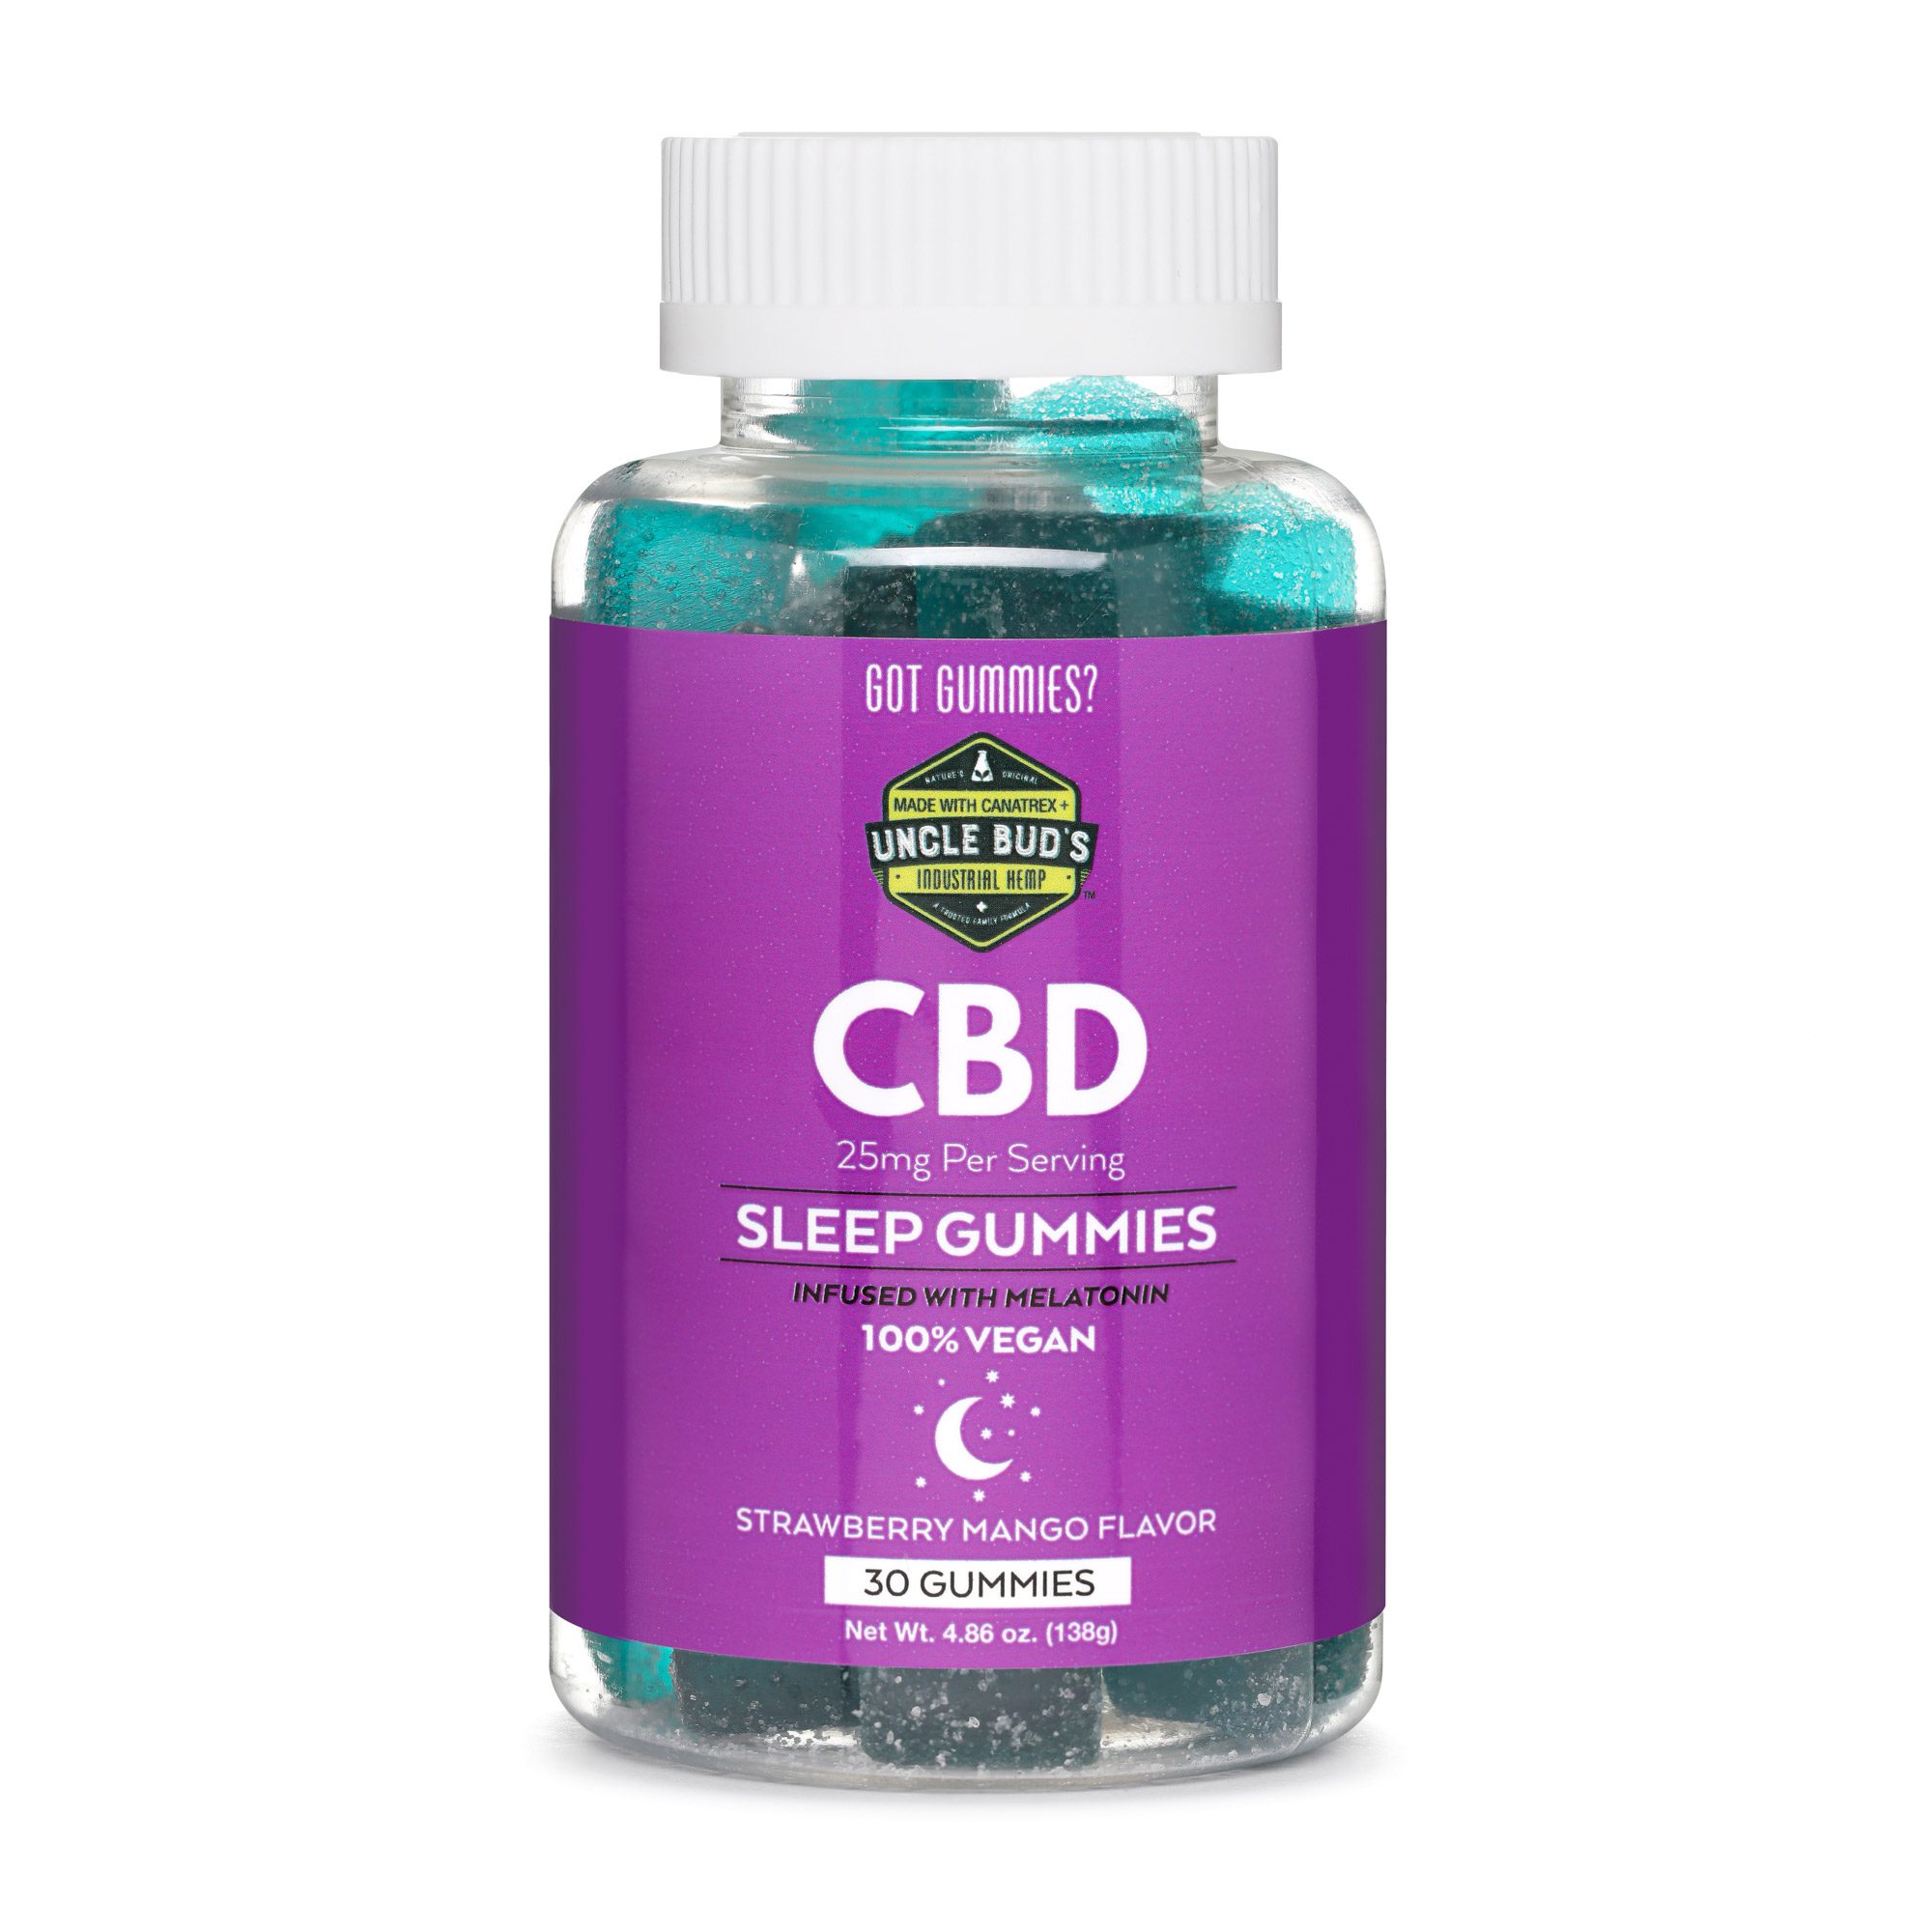 7 of the best CBD gummies for sleep